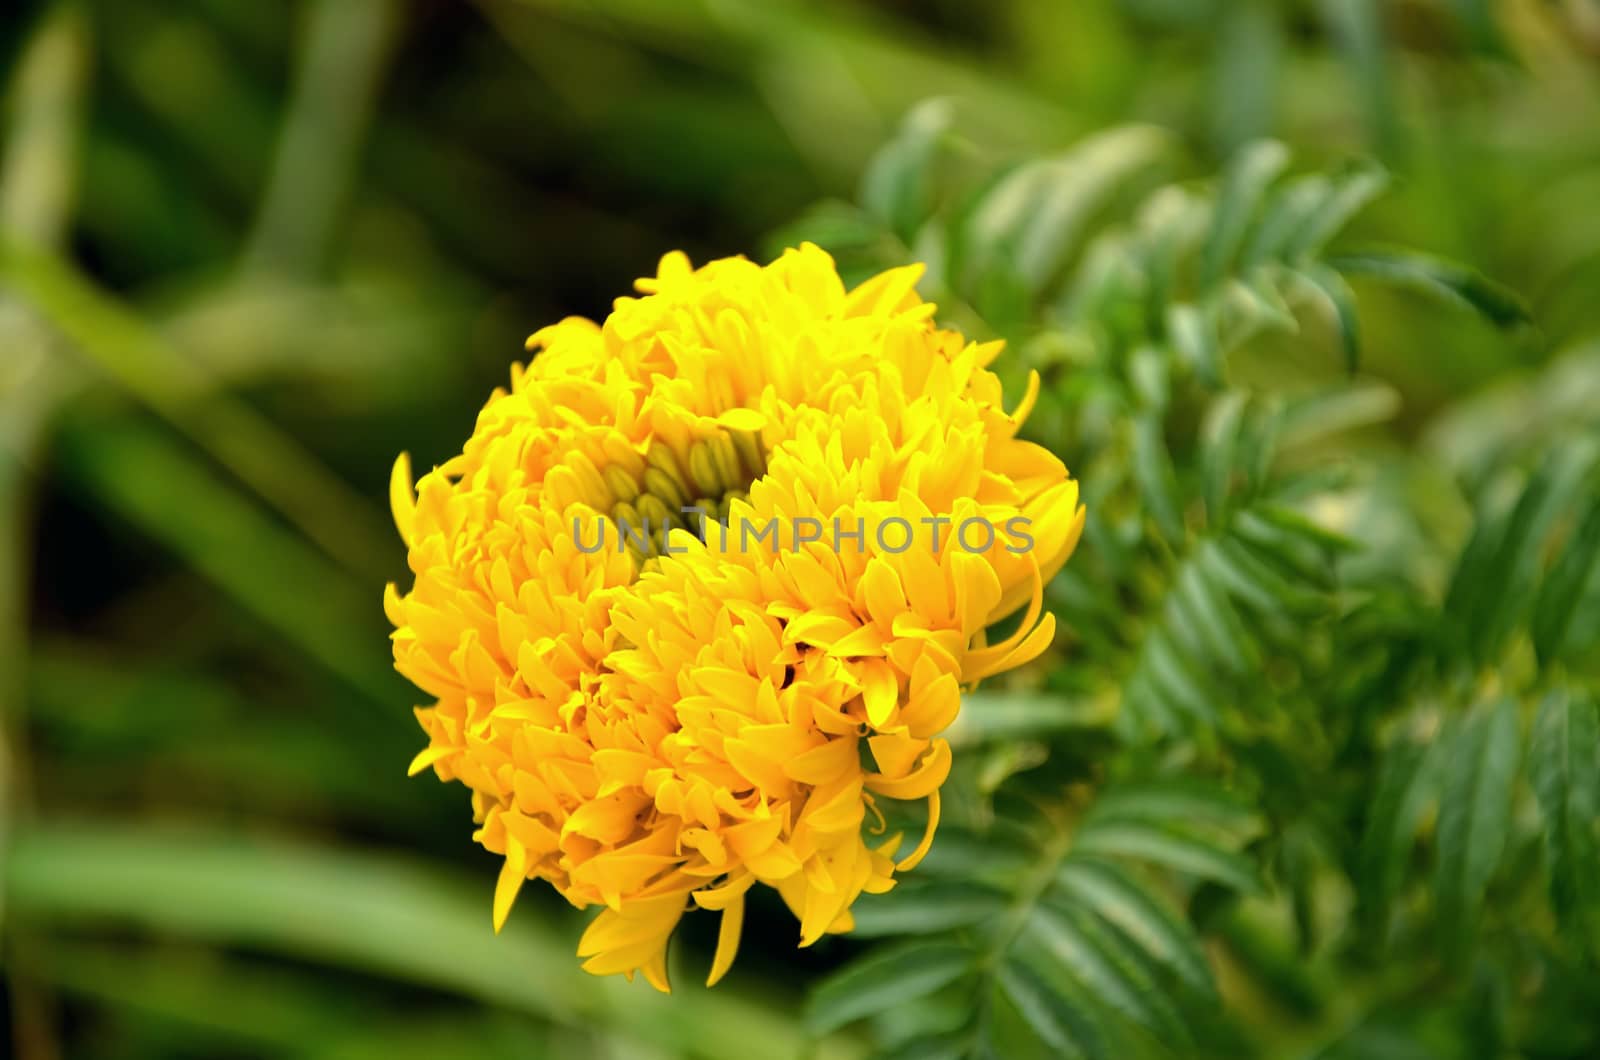 a beautifu marigold flower